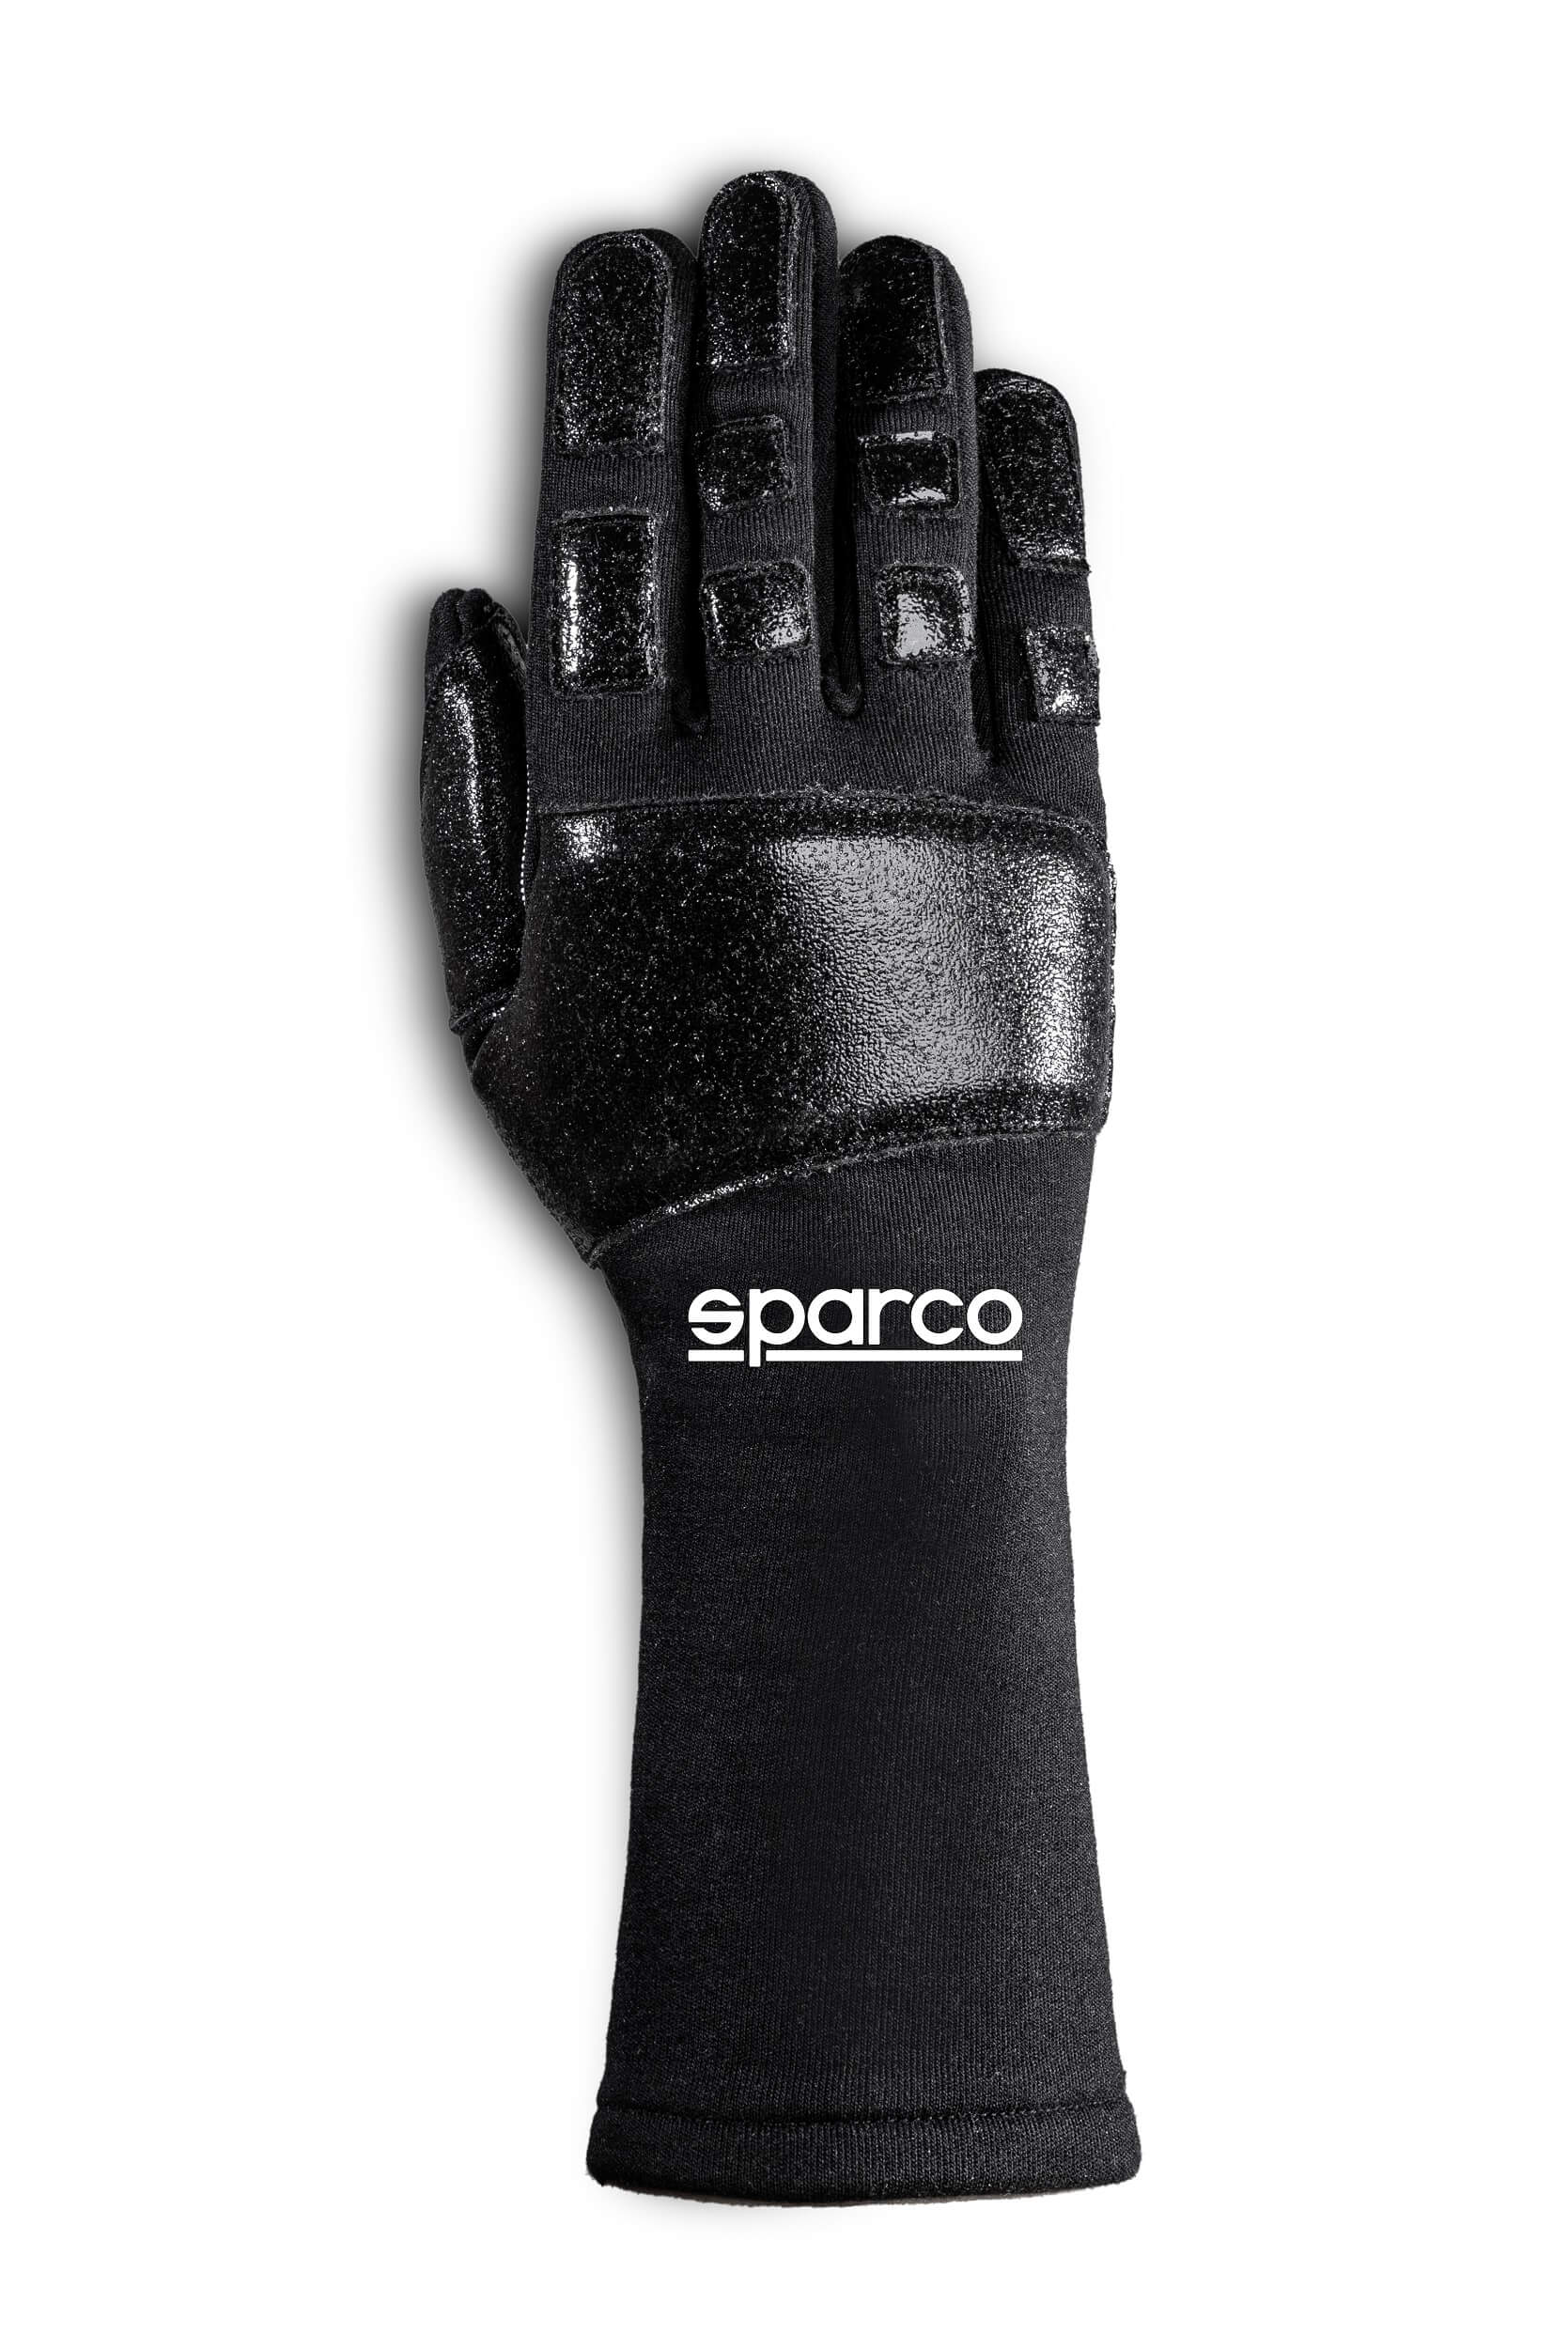 SPARCO 00131811NR TIDE MECA Gloves, NOT FIA, black, size 11 Photo-0 